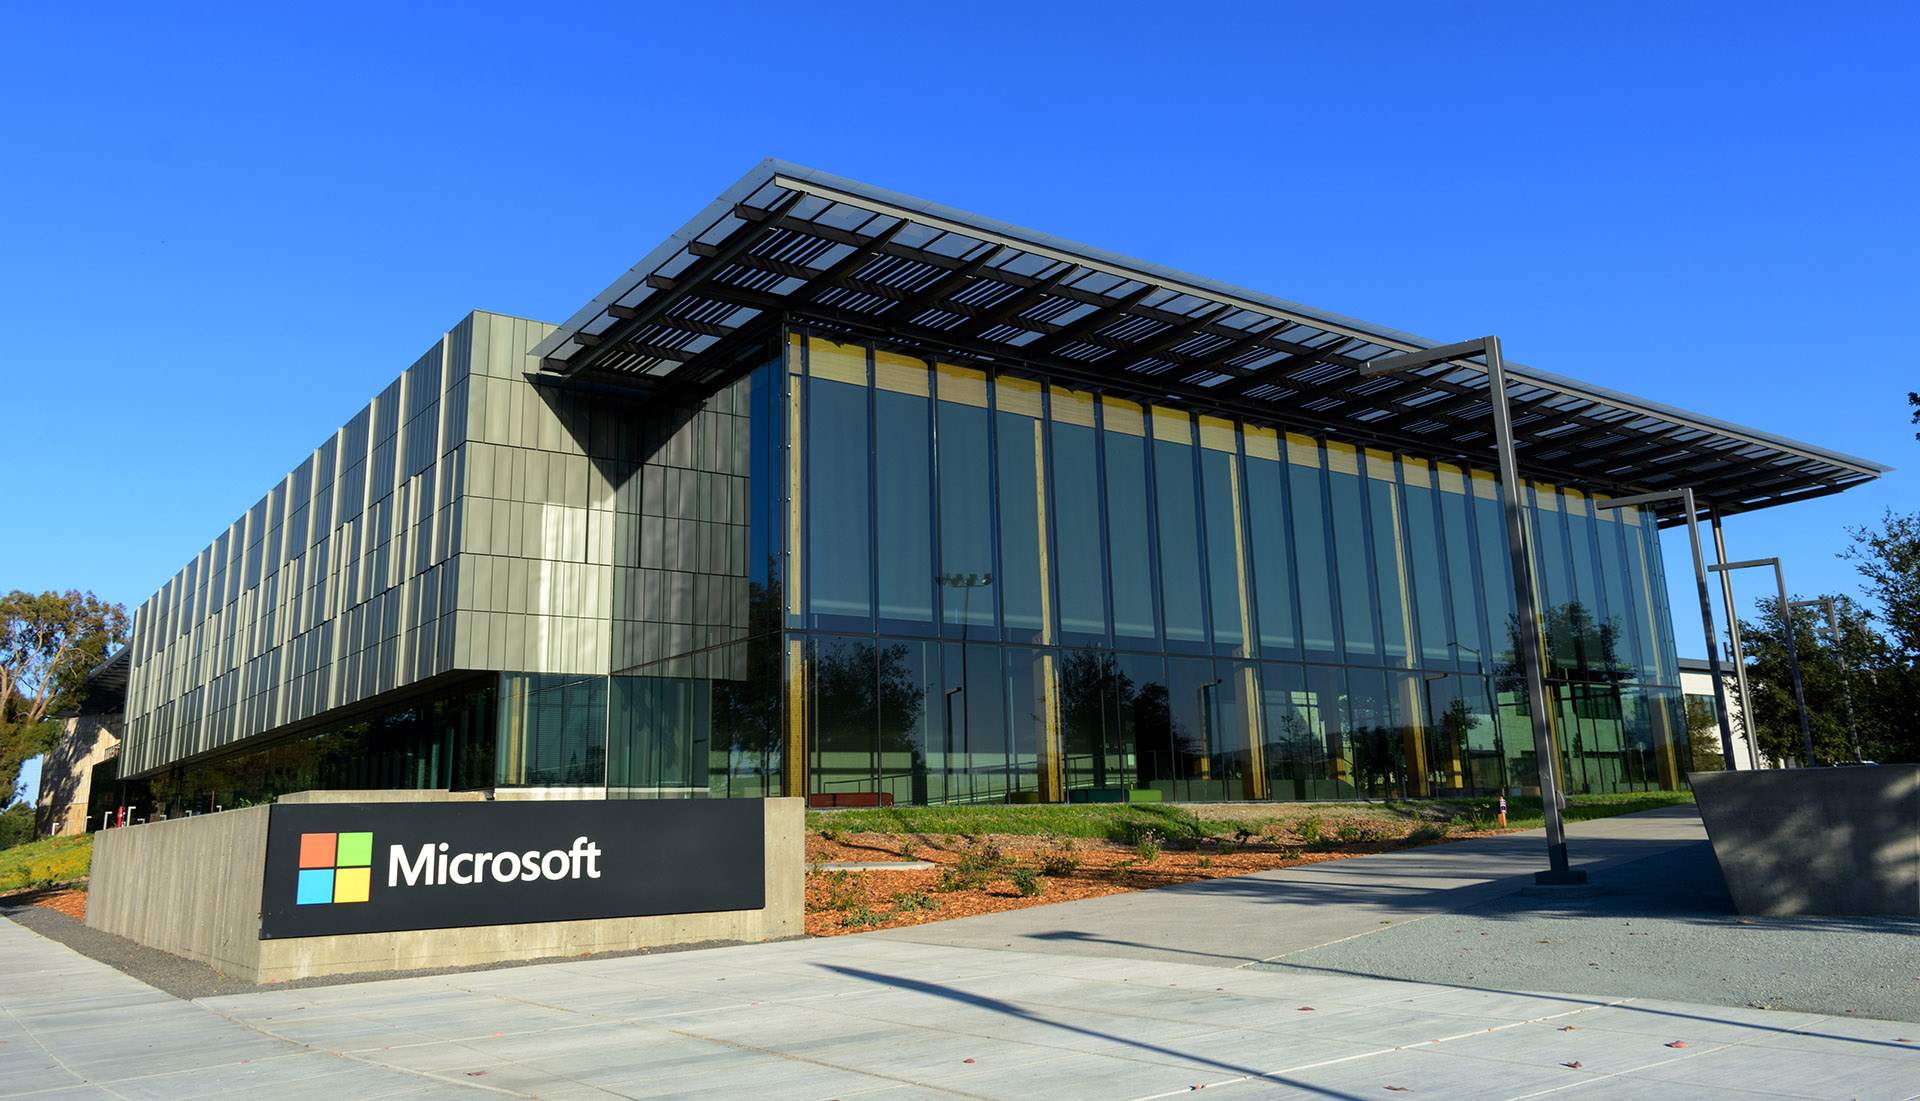 Microsoft, Redmond, Washington, USA.